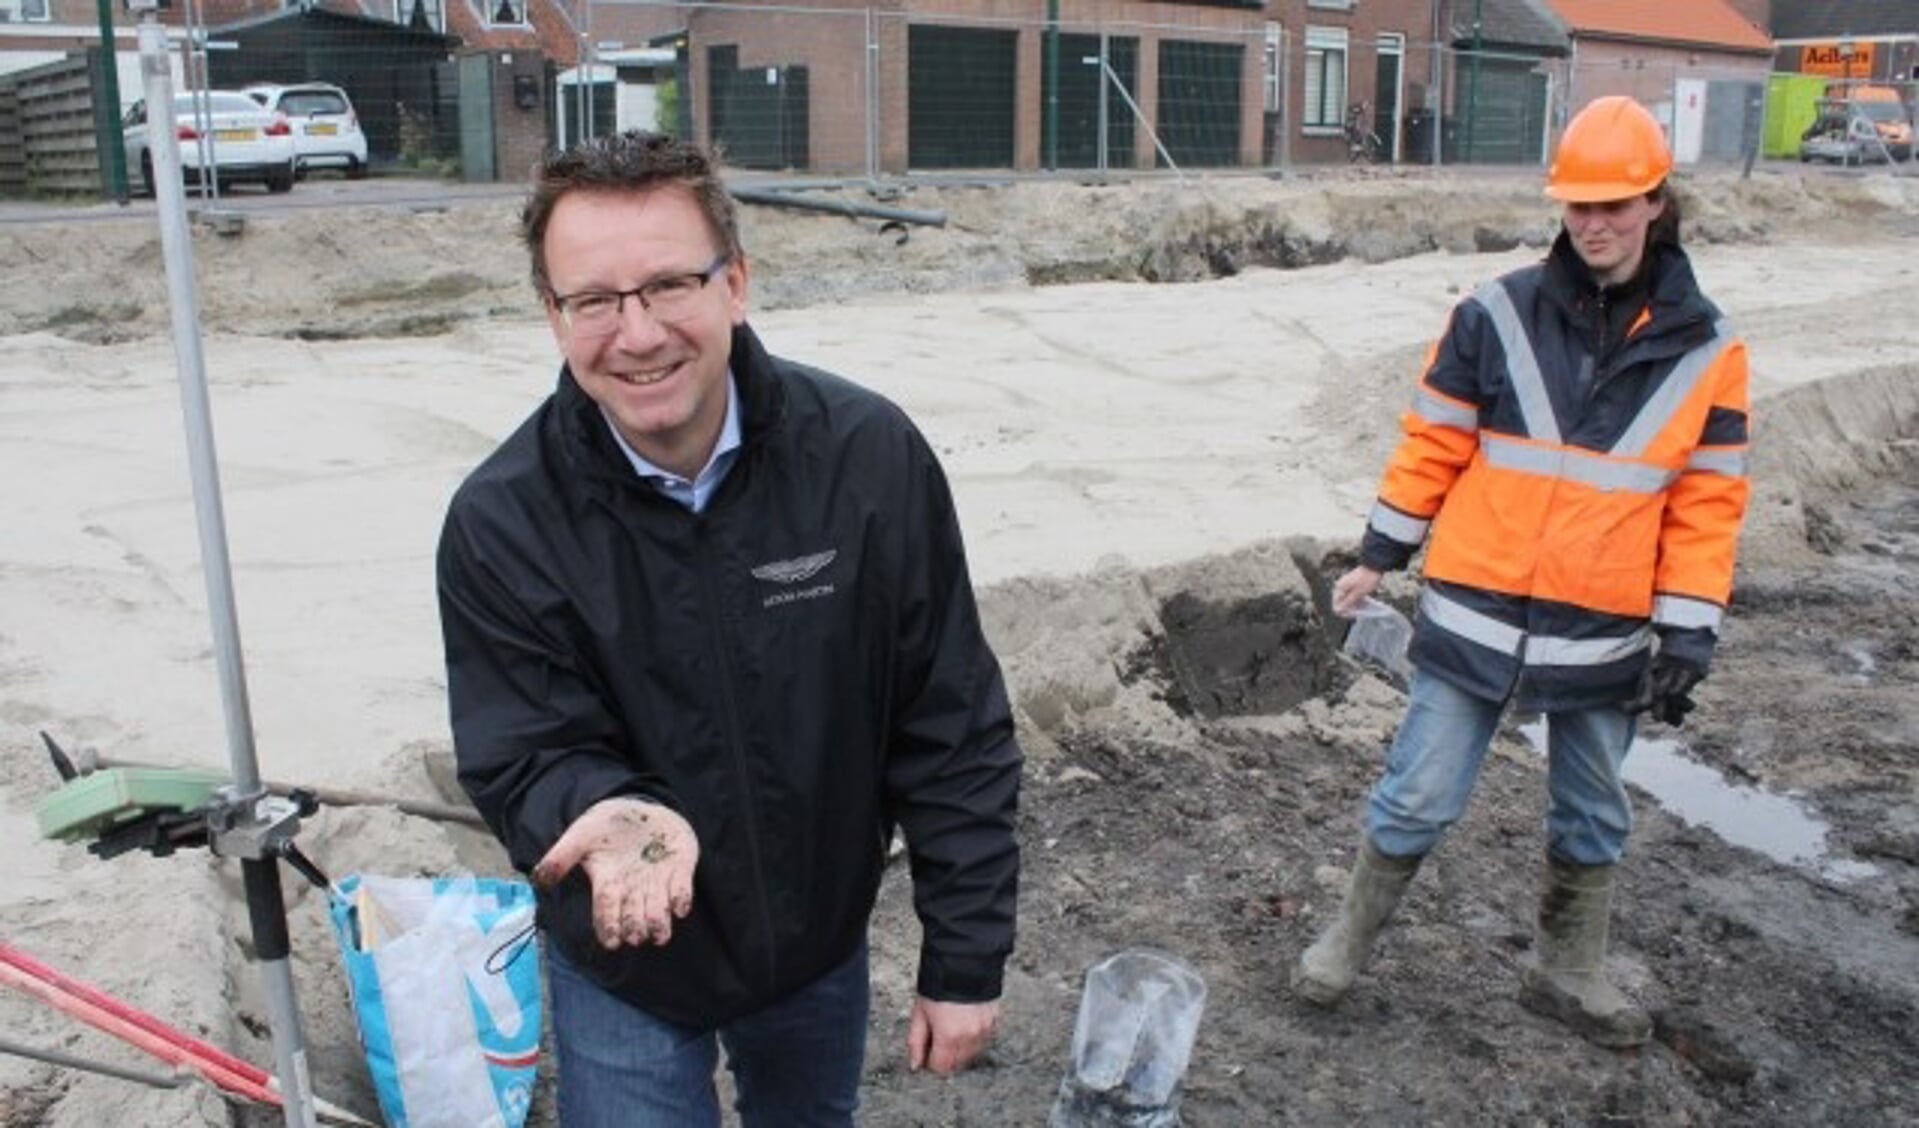 Burgemeester Patrick van Domurg in een andere rol: als amateur-archeoloog met archeologe Hanneke van Engeldorp Gastelaars. (Foto: Lysette Verwegen)